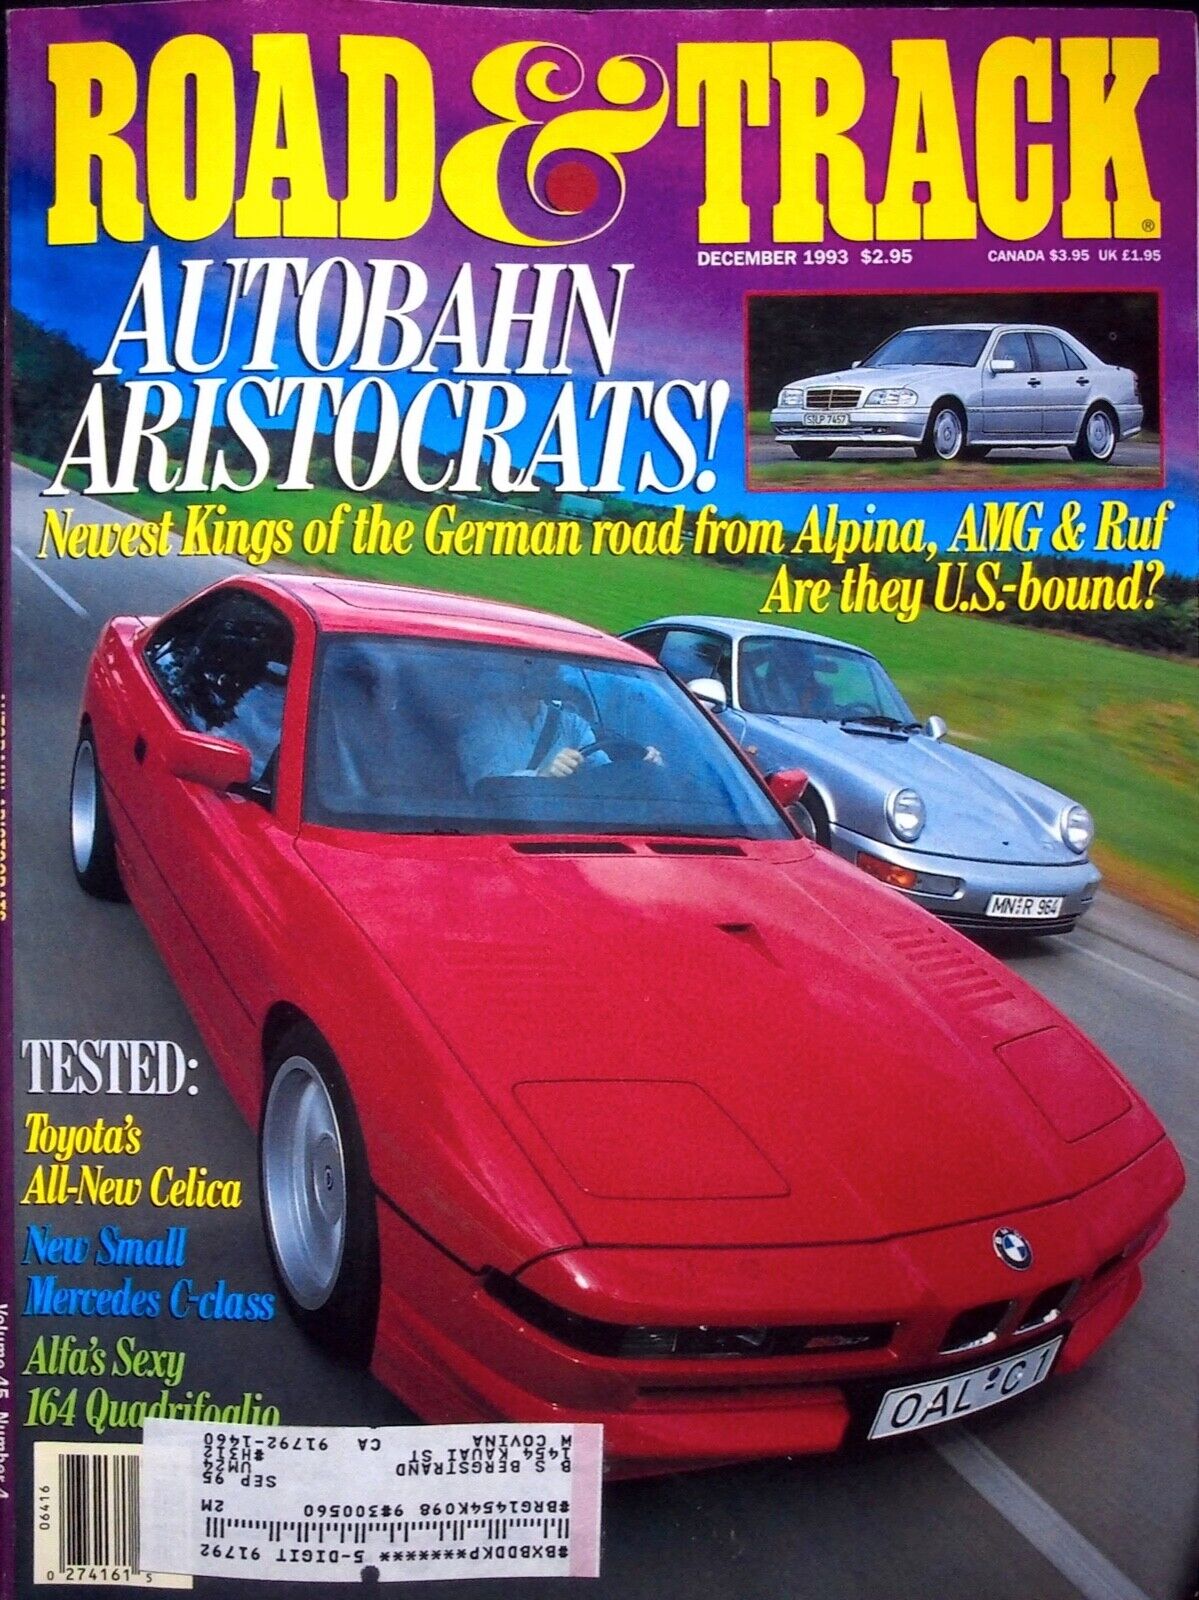 AUTOBAHN ARISTOCRATS - ROAD & TRACK MAGAZINE, DECEMBER 1993 VOLUME 45, NUMBER 4